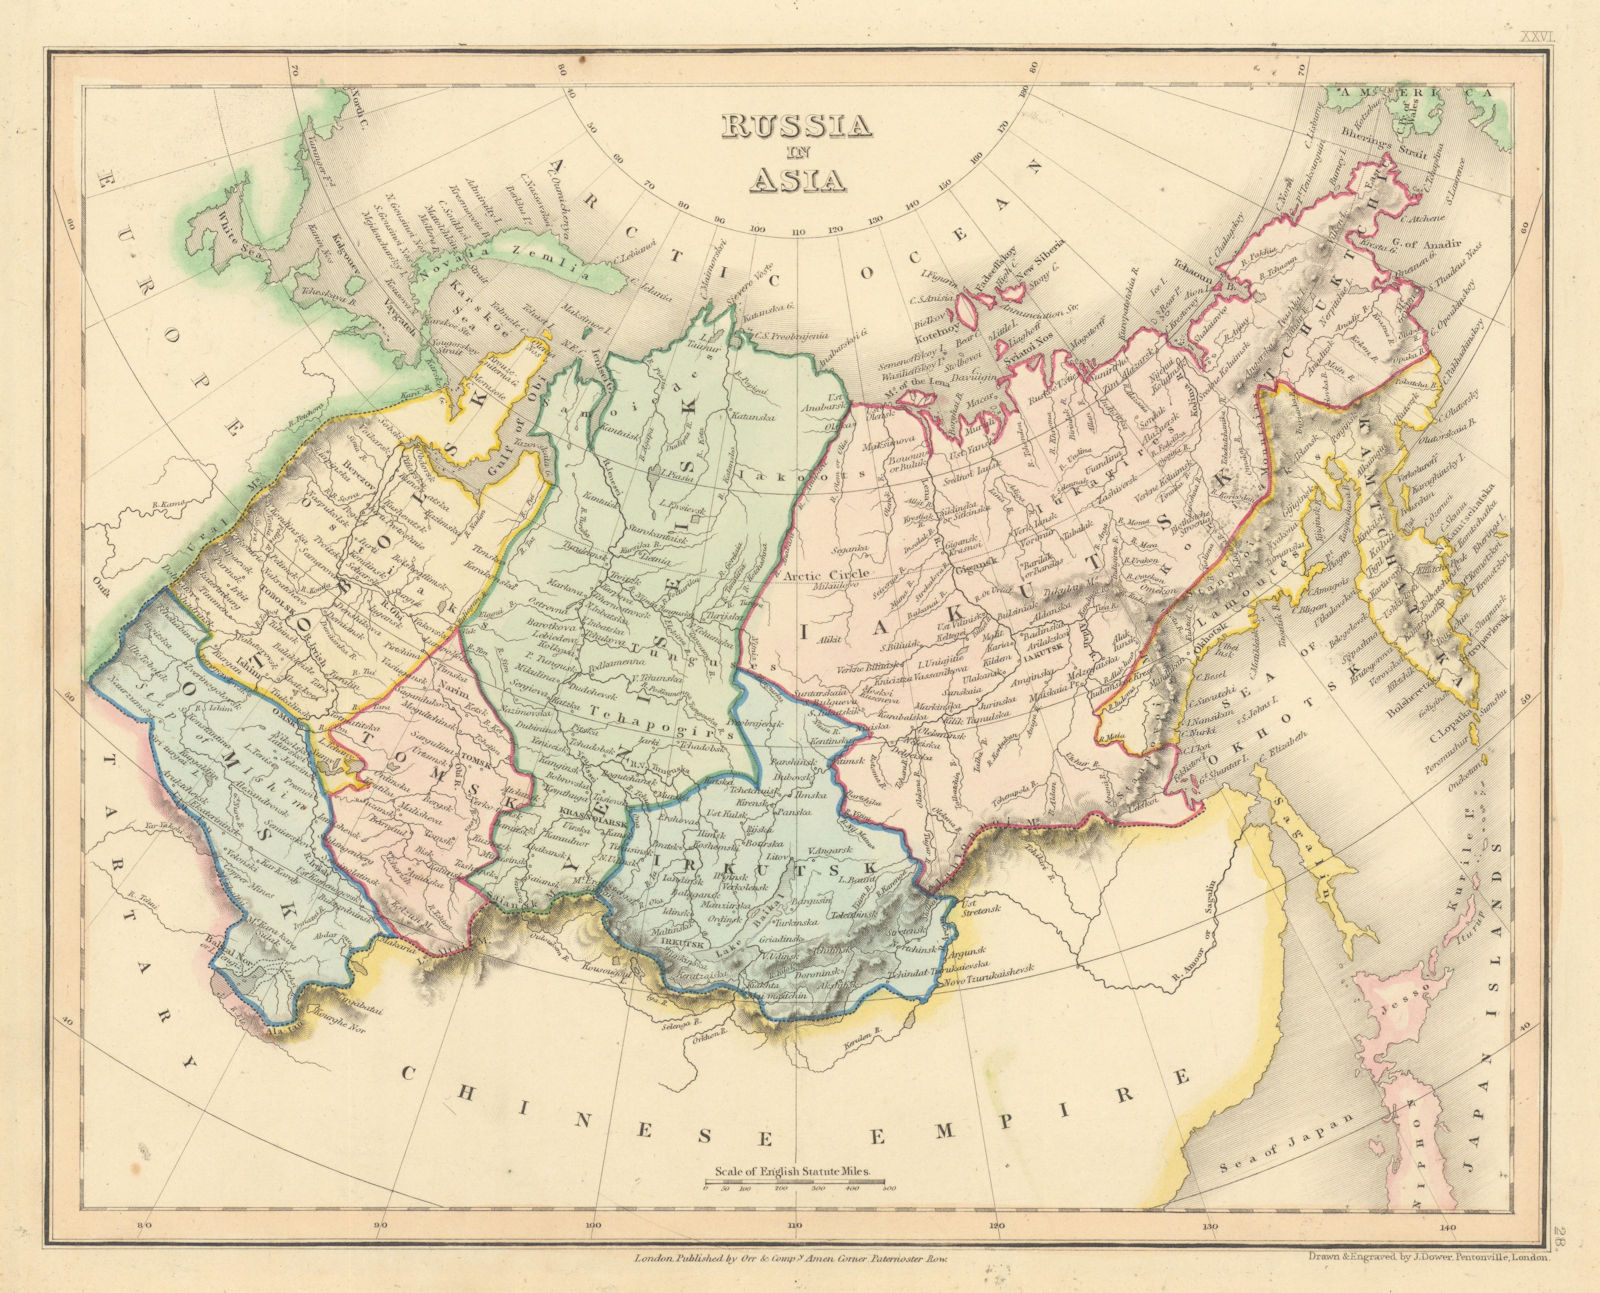 Russia in Asia by John Dower. Irkutsk Iakutsk Kamchatka Tomsk Yeniseisk 1845 map